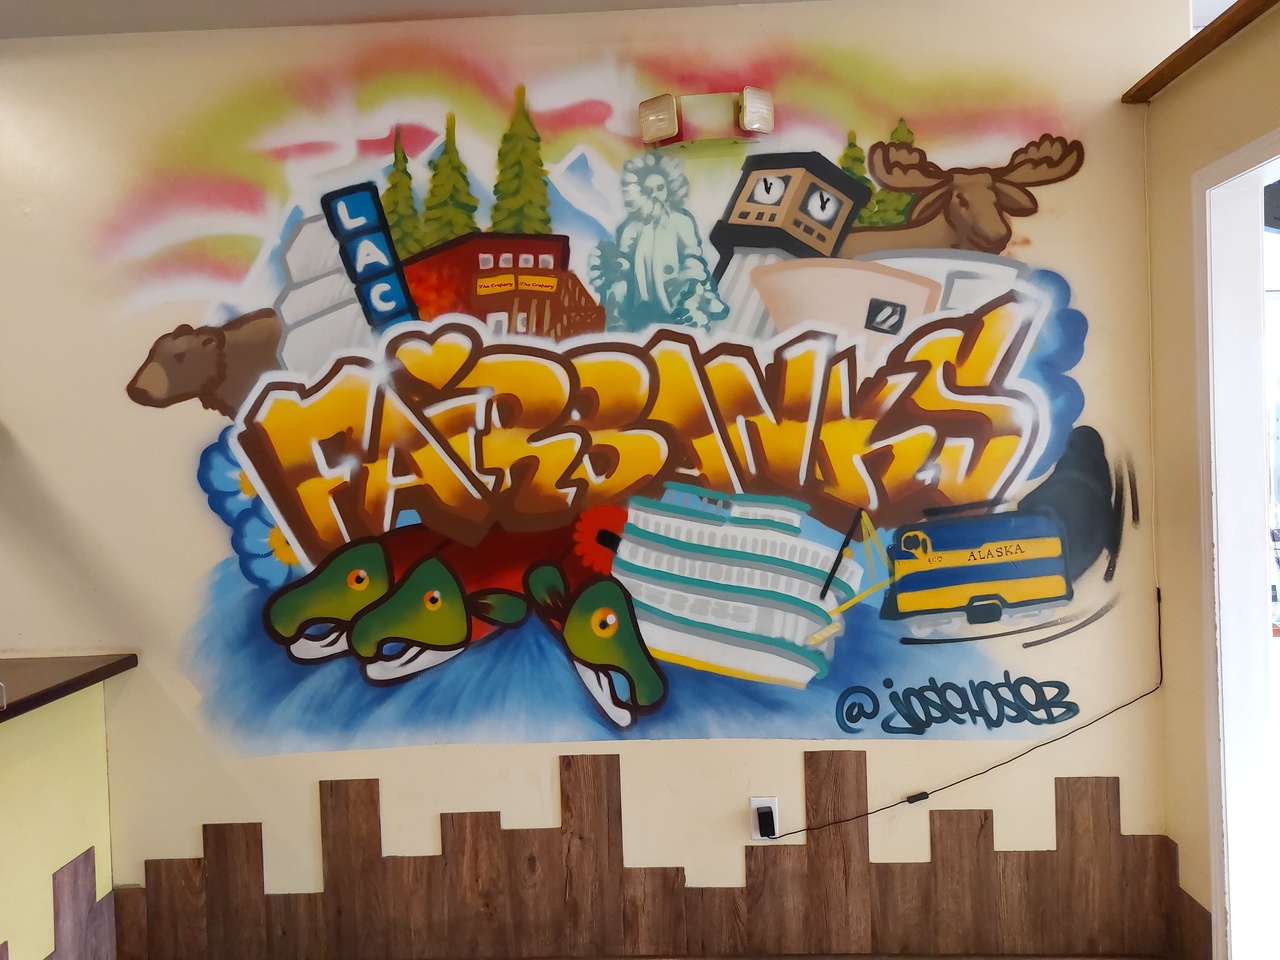 Fairbanks-mural-at-Crepery.jpg